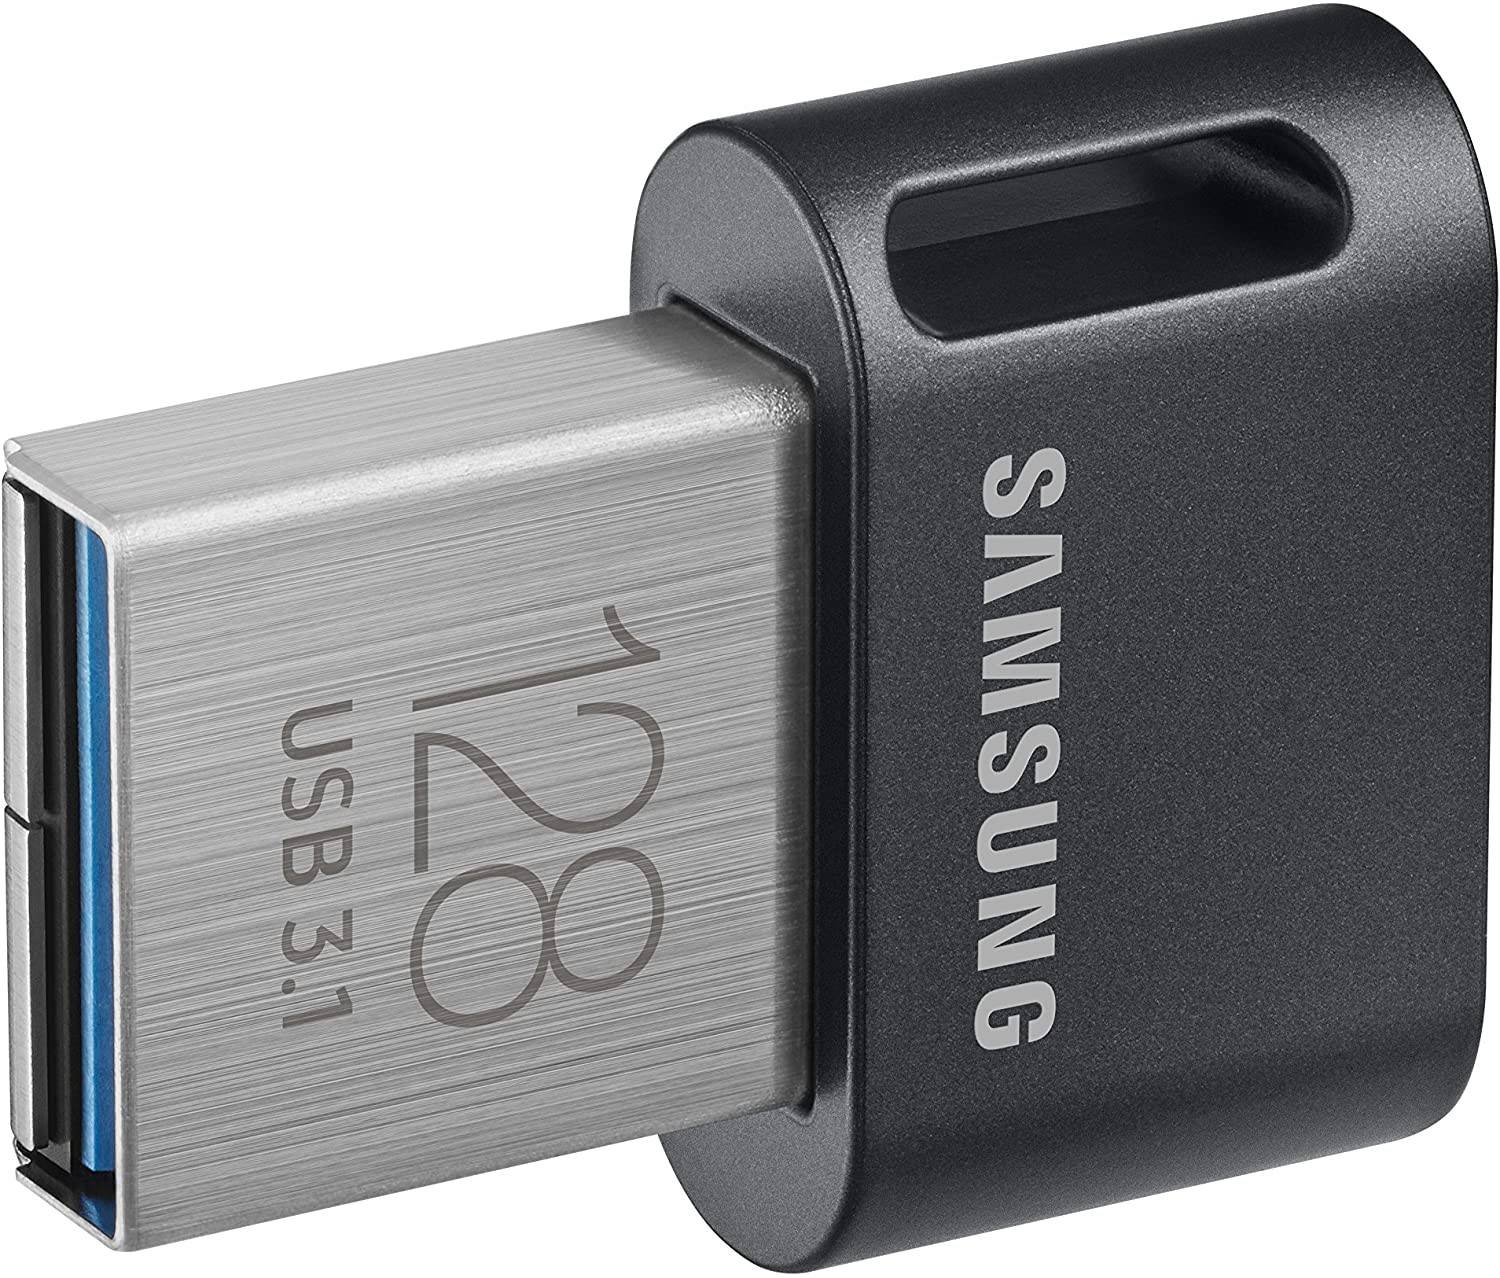 Samsung FIT Plus flash drive